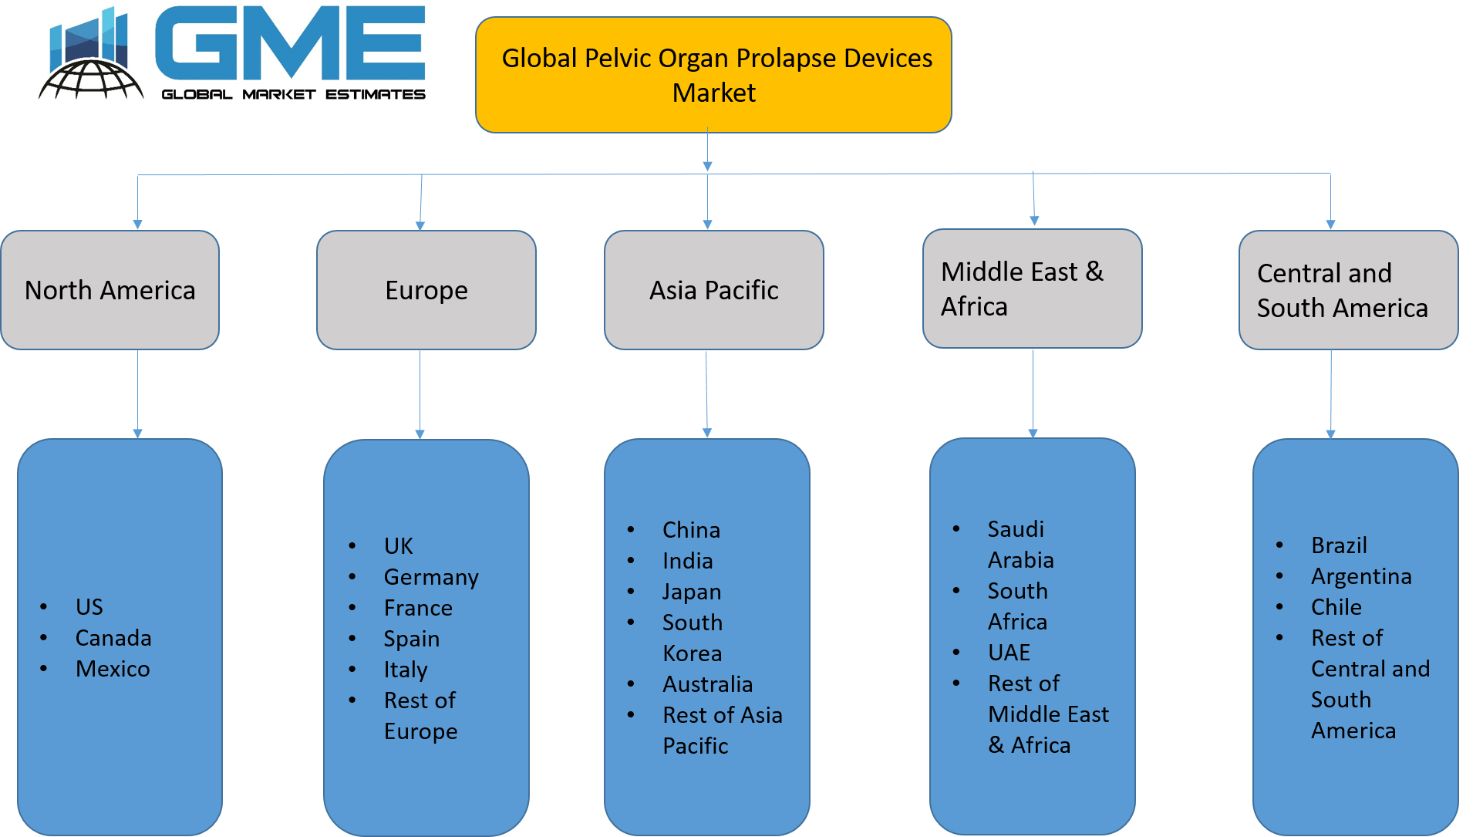 Global Pelvic Organ Prolapse Devices Market - Regional Analysis